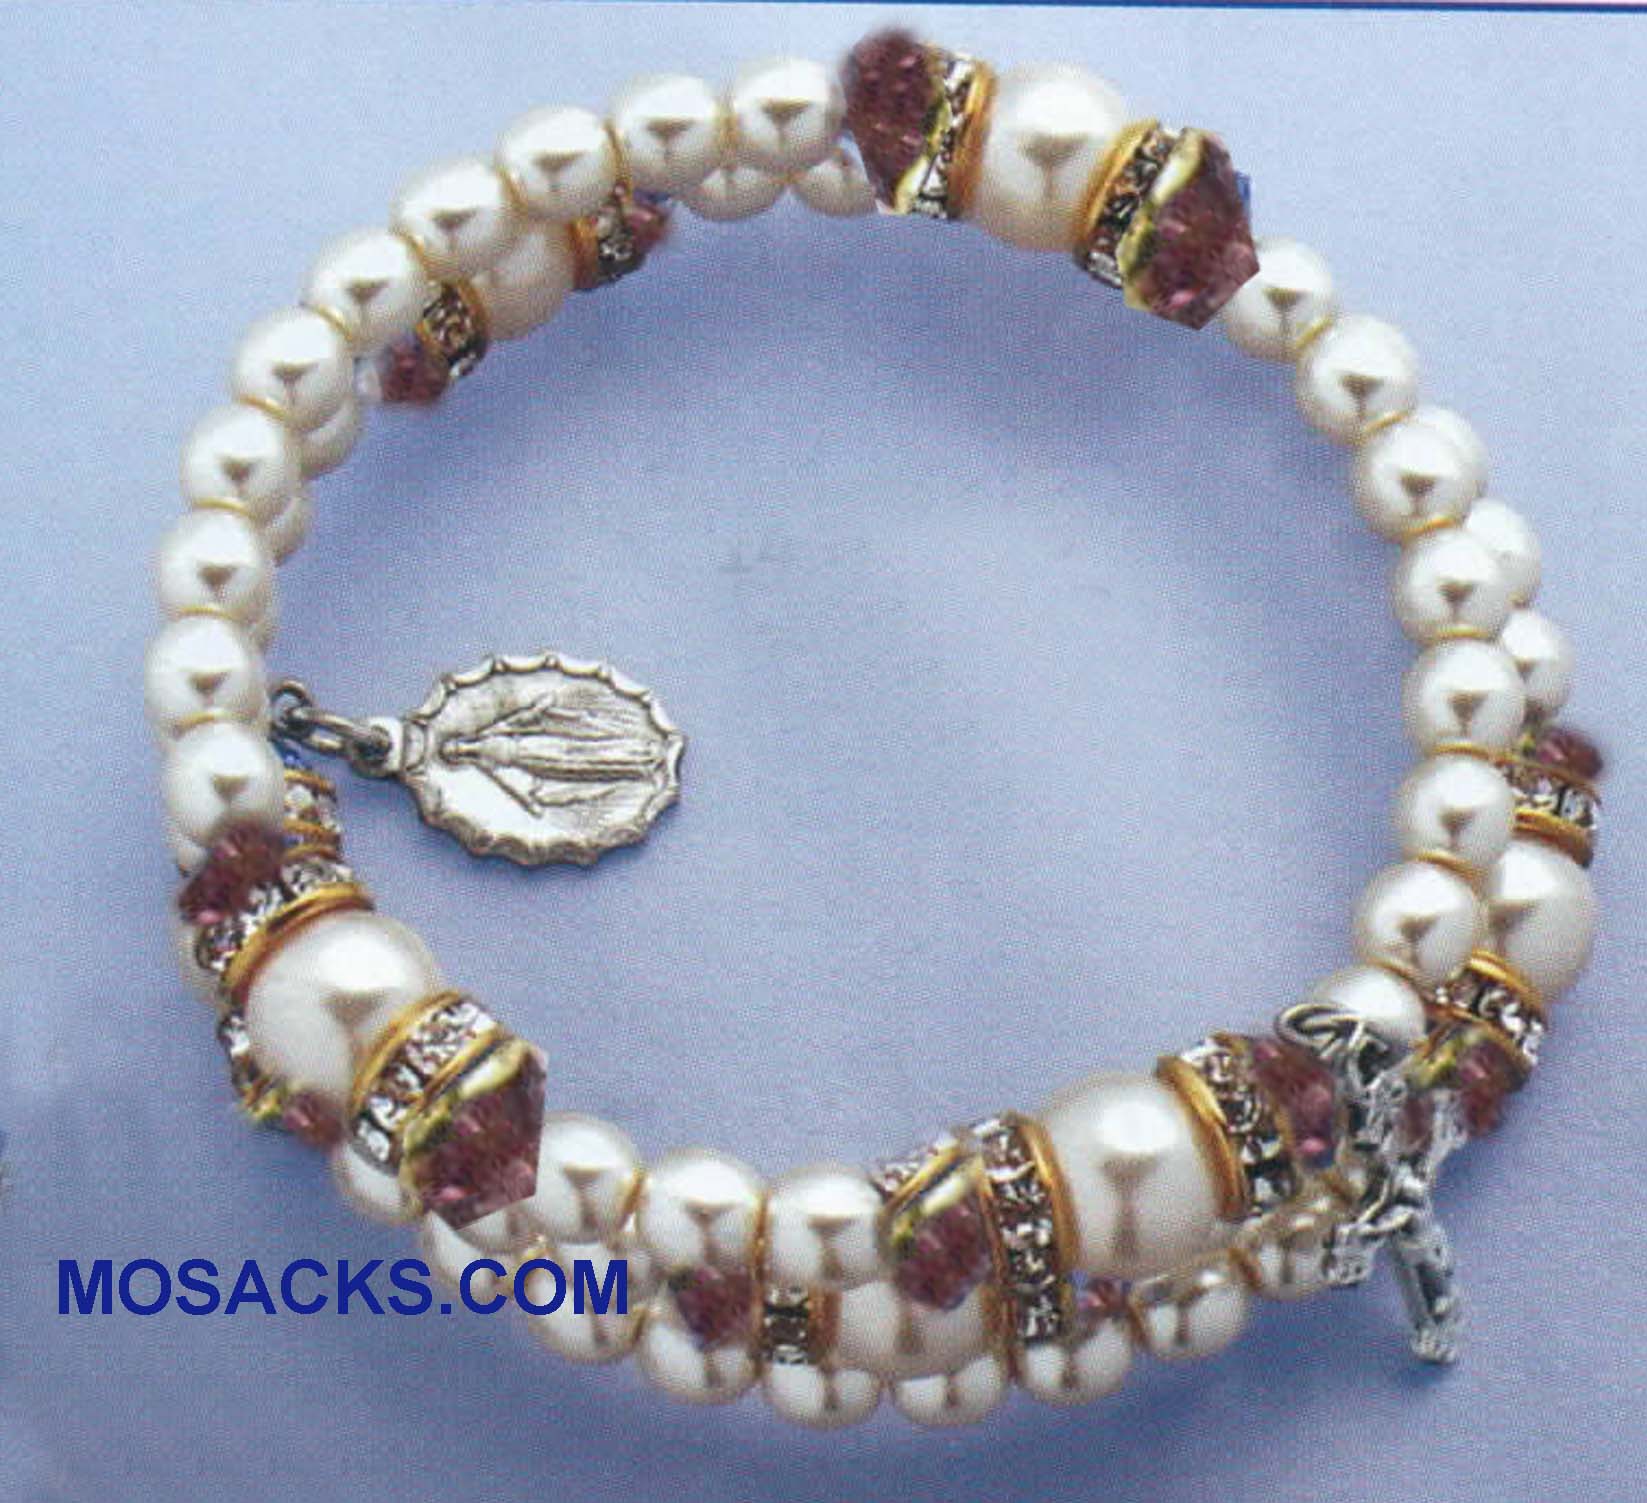 February Birthstone Rosary Bracelet Rosary Spiral Bracelet Amethyst -14298LA Amethyst February Birthstone Rosary Wrap Bracelet